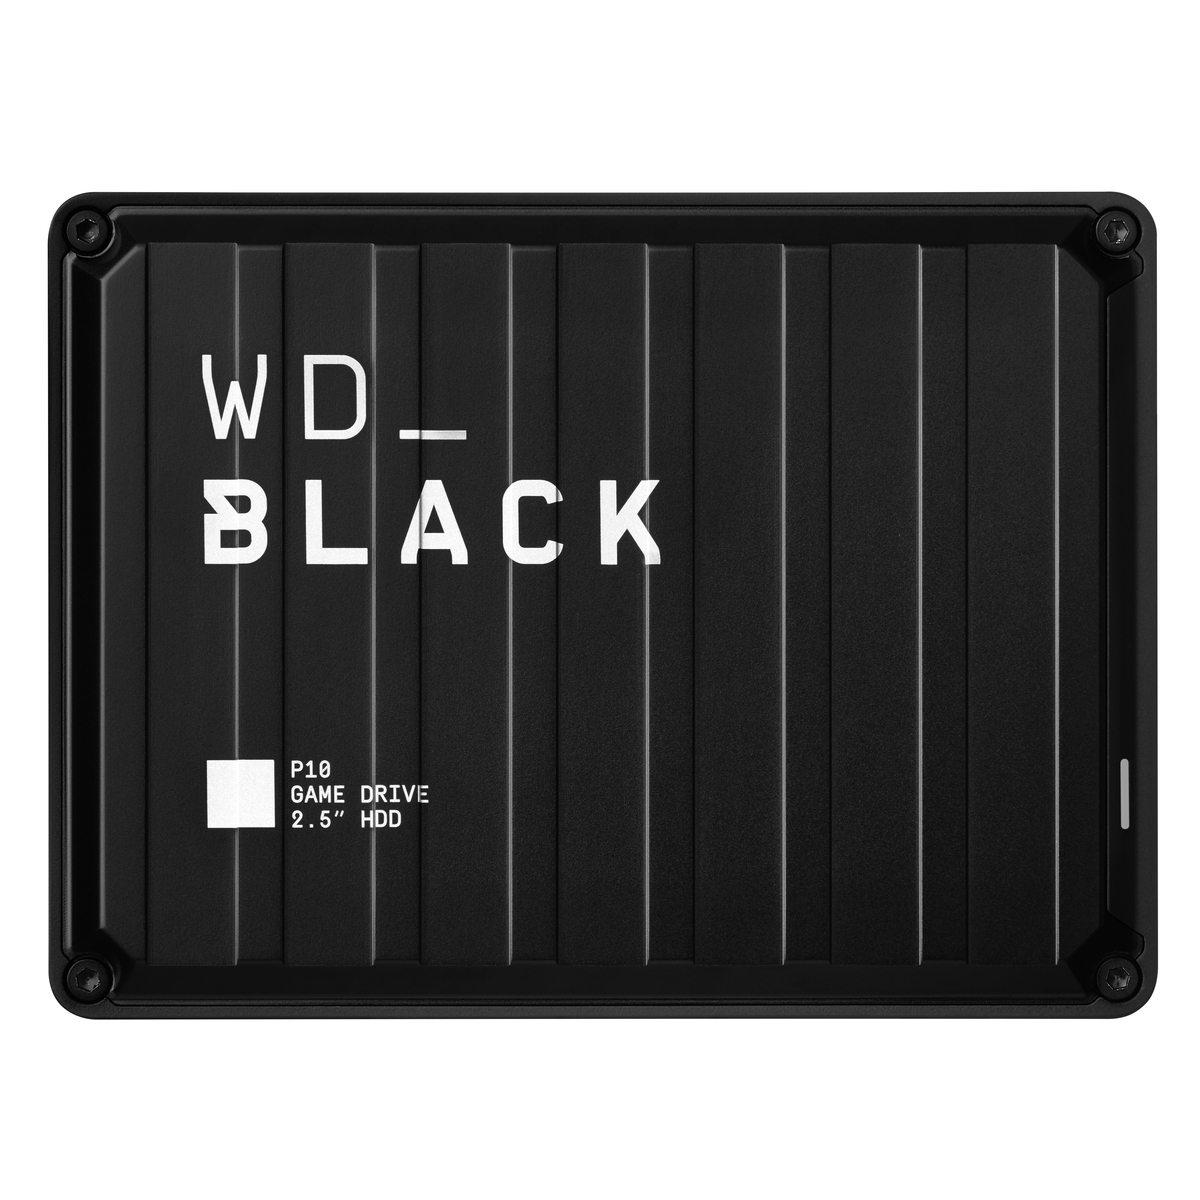 Externe Festplatte 2 TB WD BLACK P10 GAME DRIVE